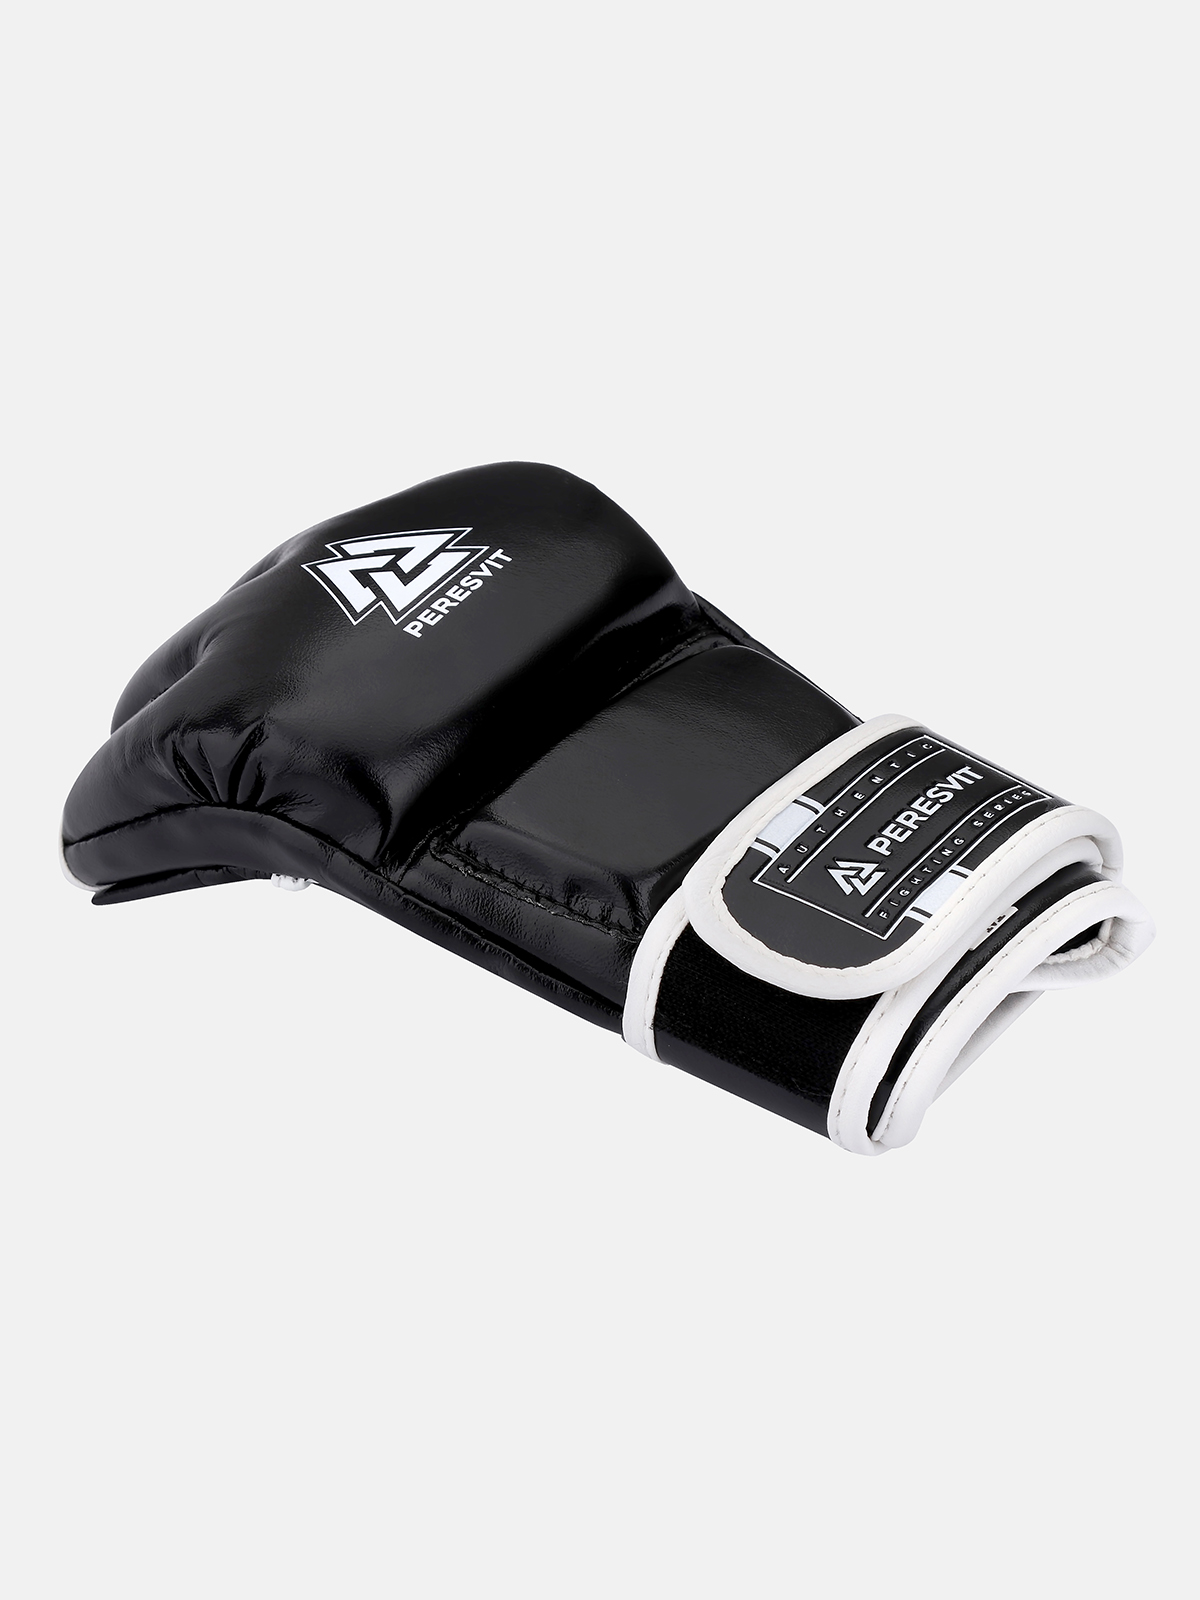 Peresvit Precision MMA Gloves, Photo No. 2